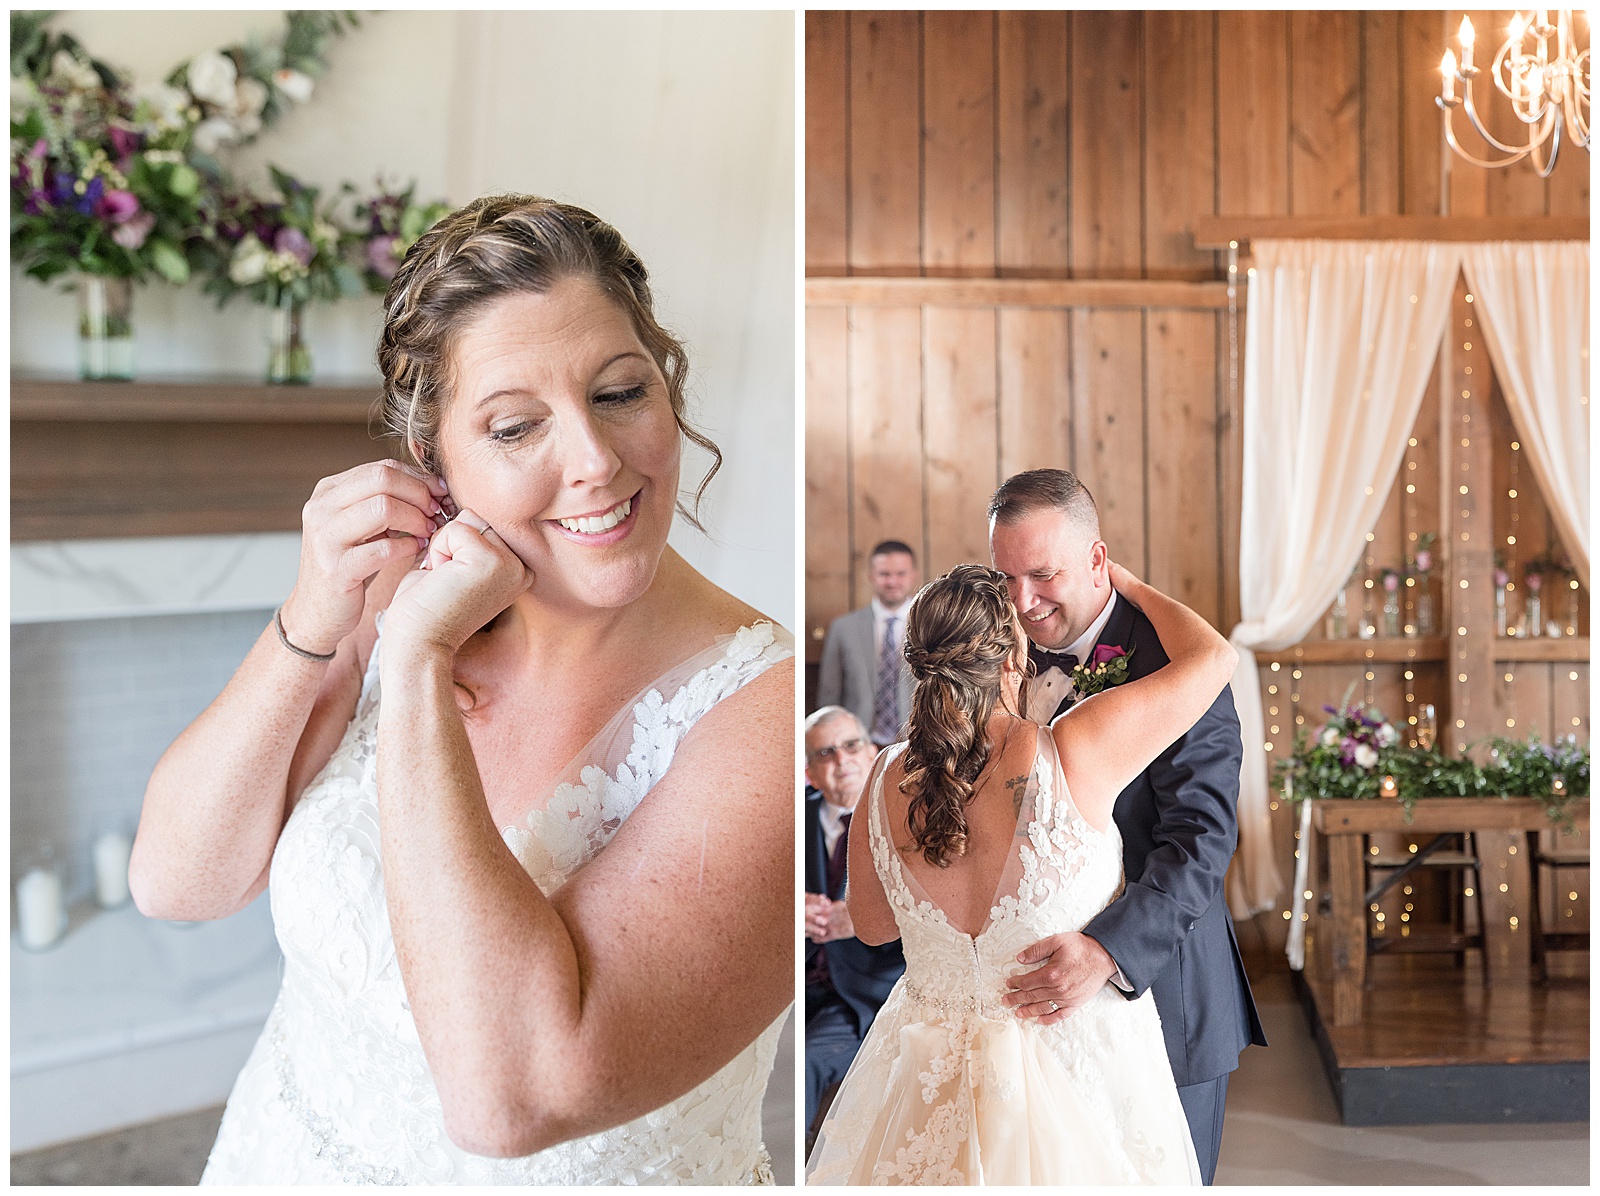 bride and groom dancing during their wedding reception inside rustic barn venue